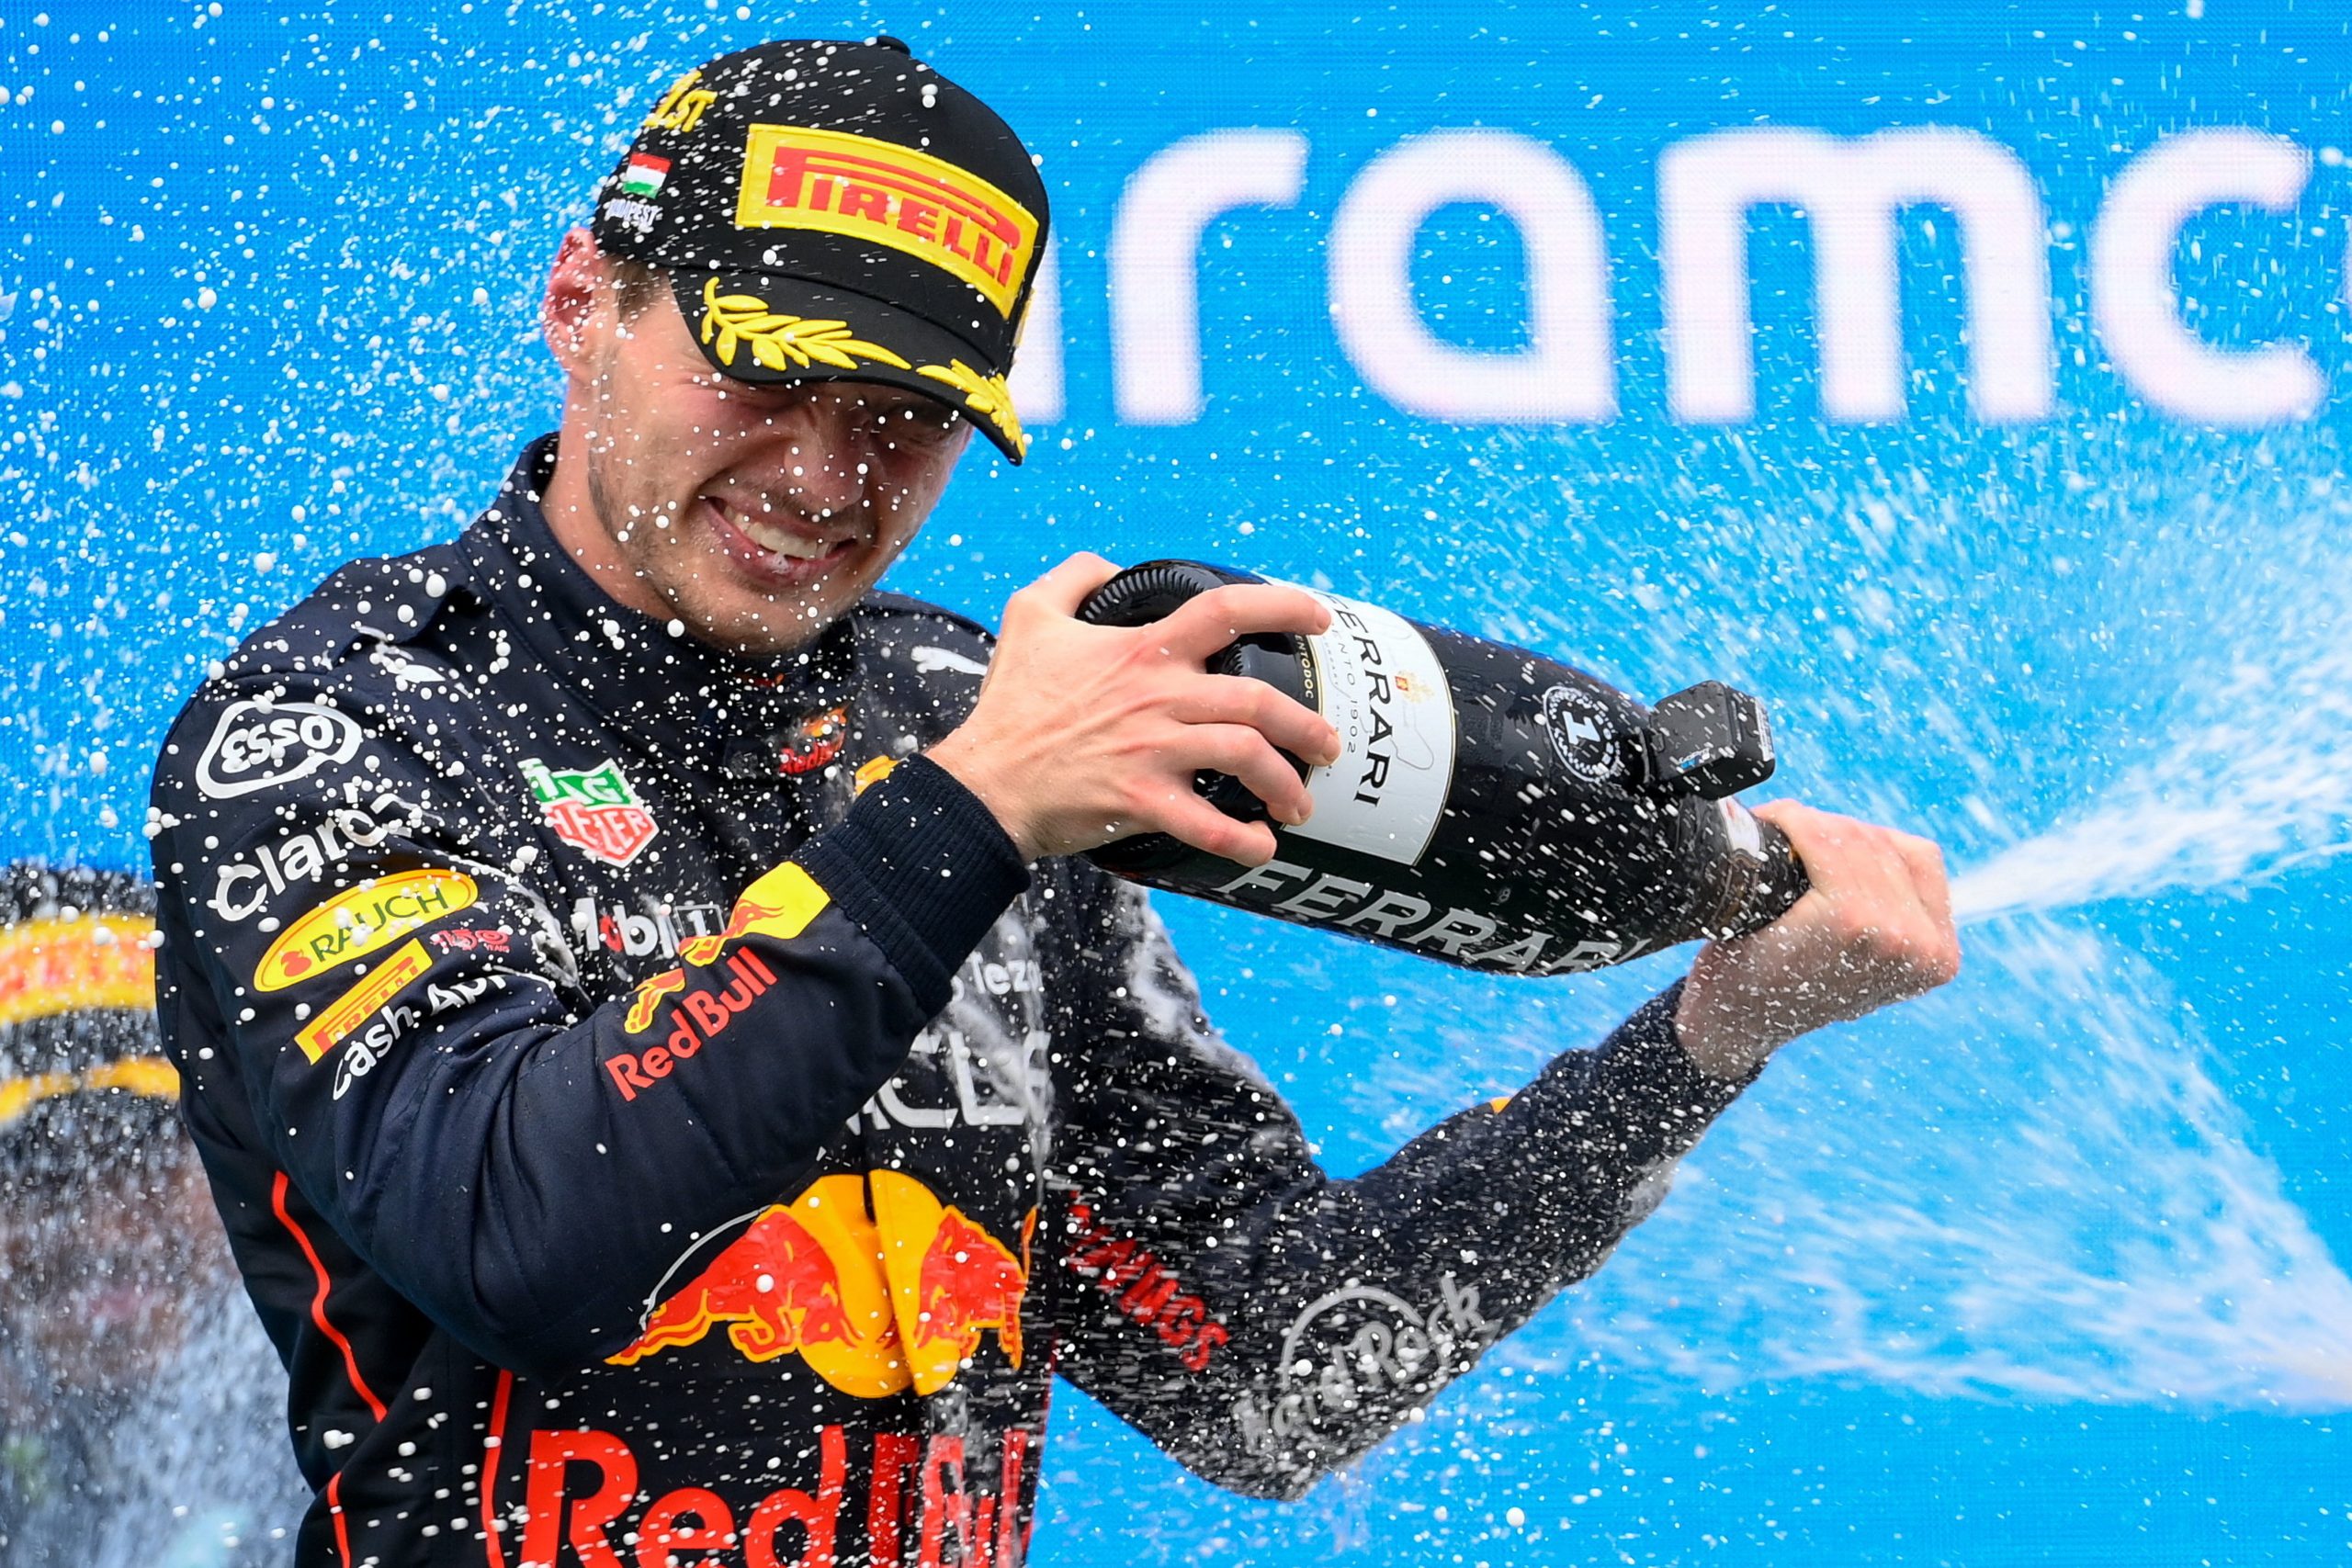 Hungarian Grand Prix - First Win for Verstappen at Hungaroring - PHOTOS